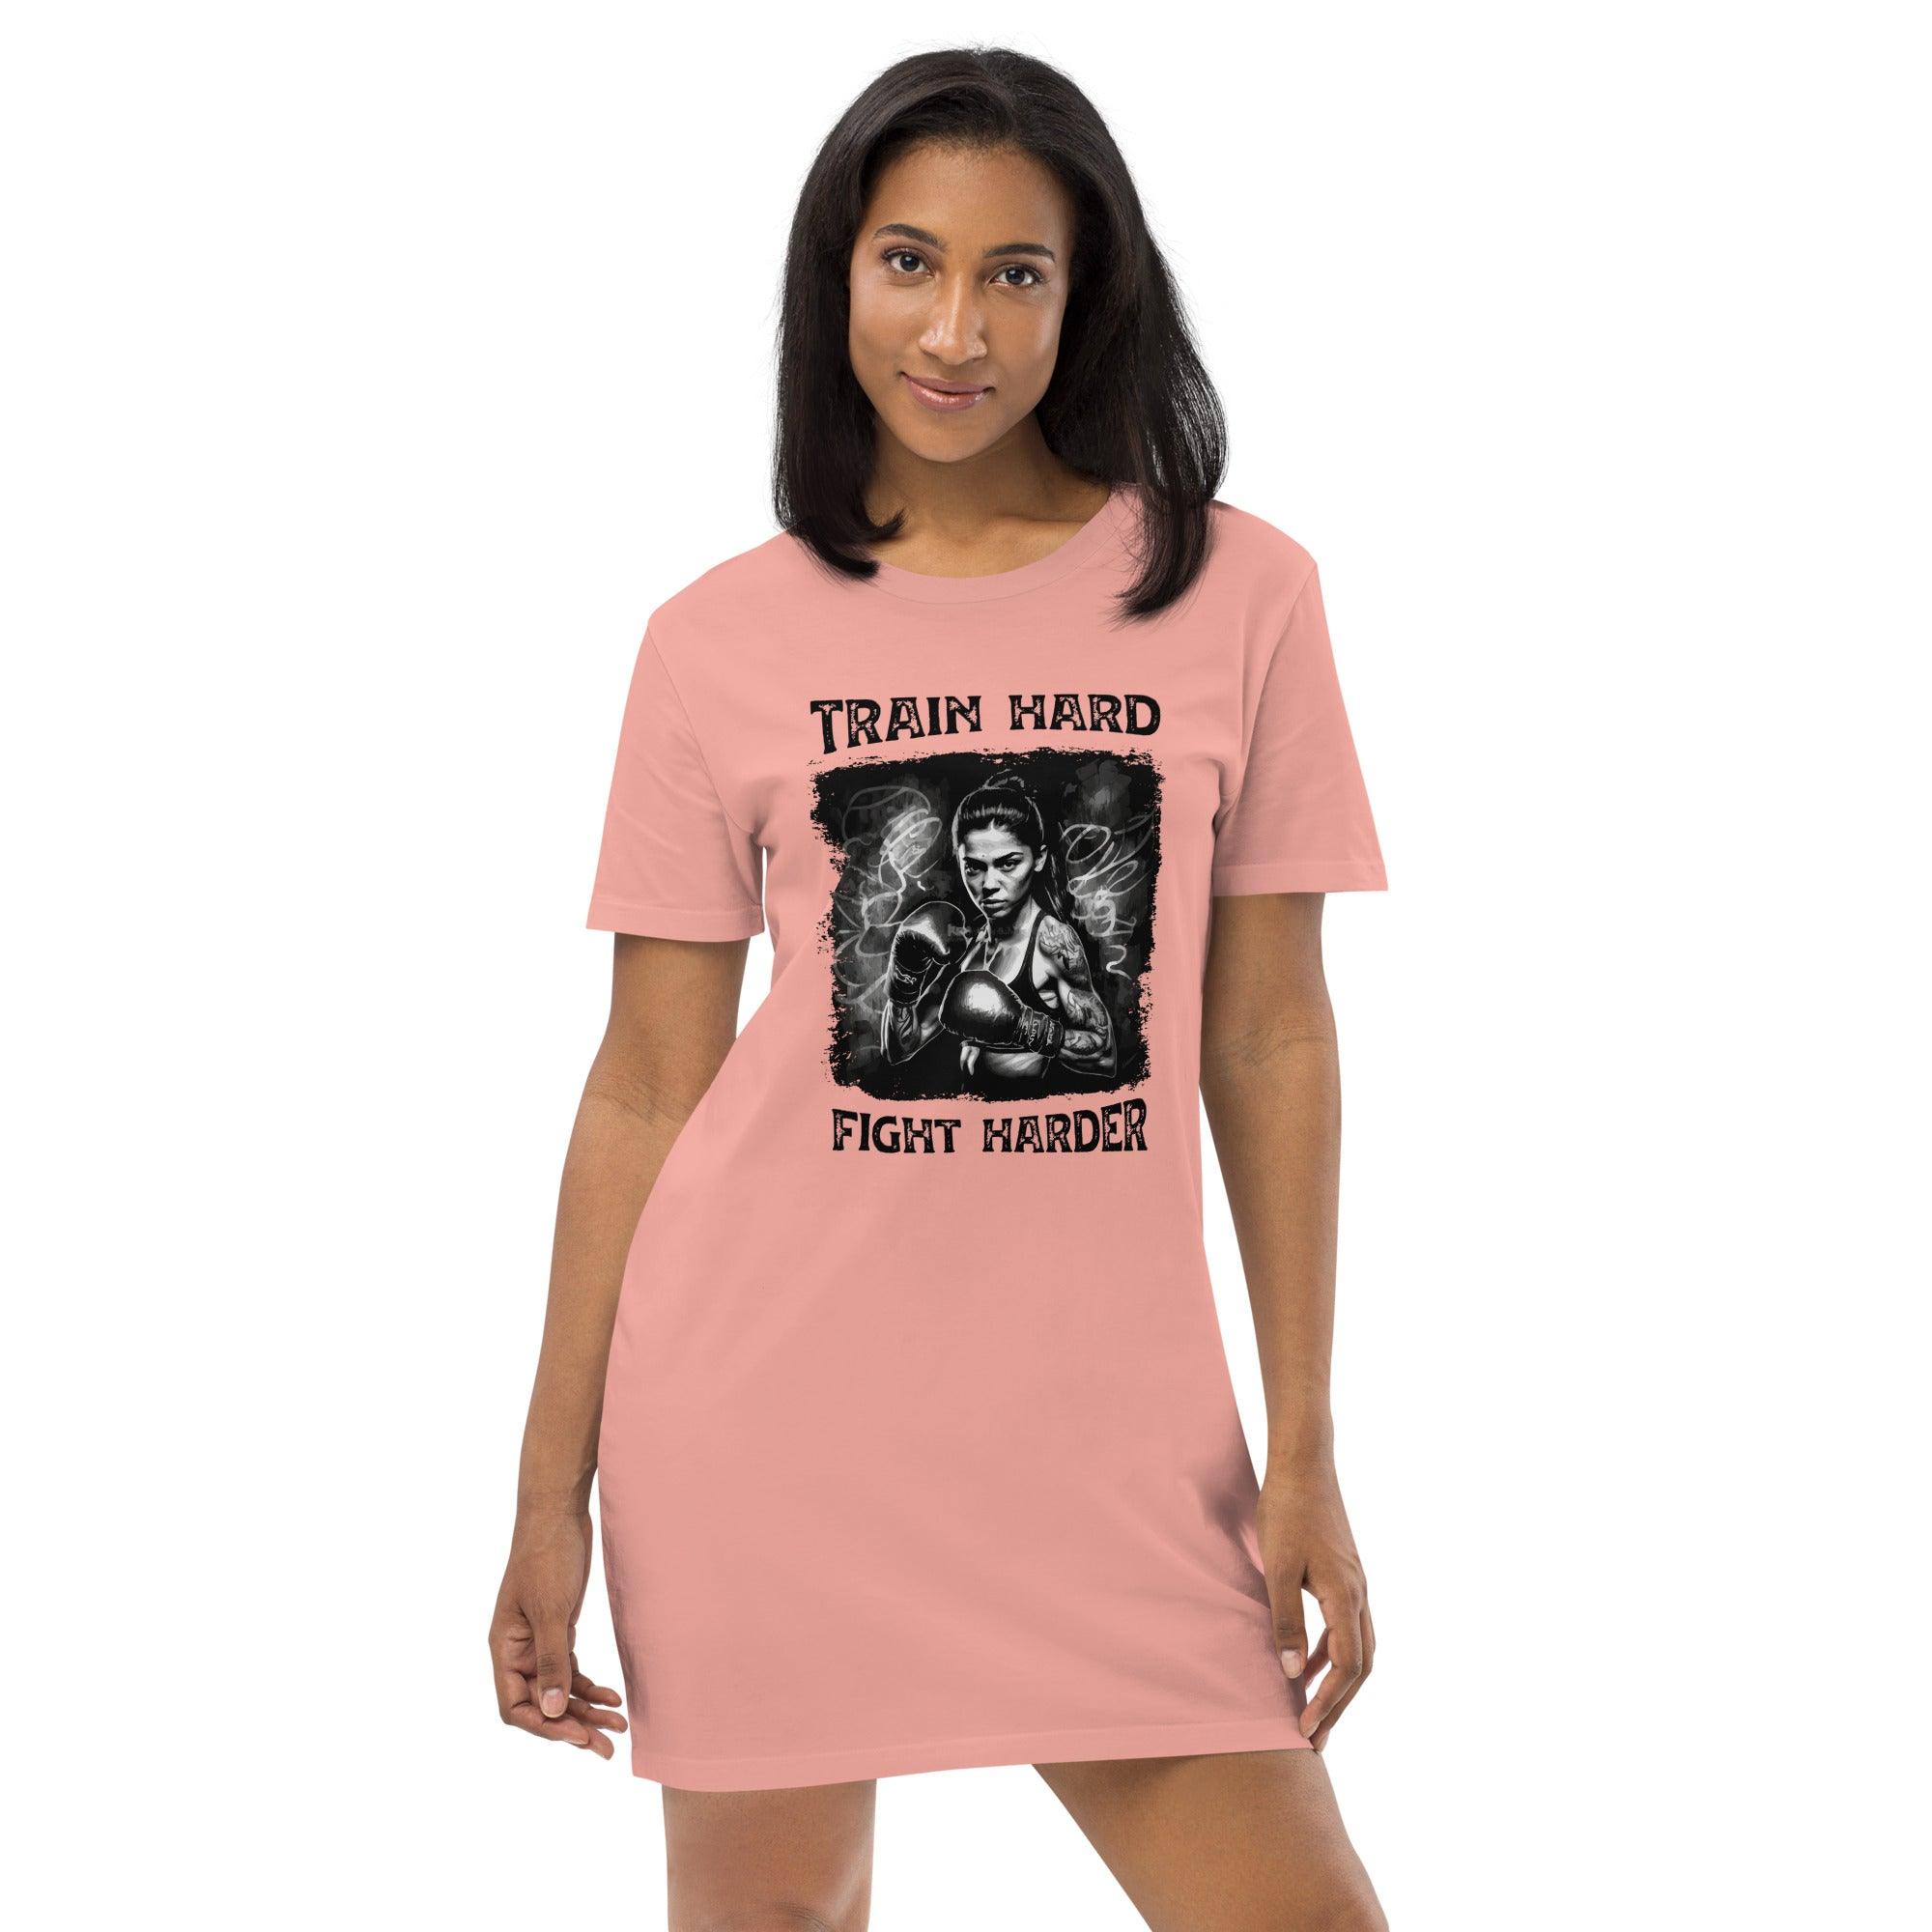 Train Hard Fight Harder Organic Cotton T-shirt Dress - Beyond T-shirts